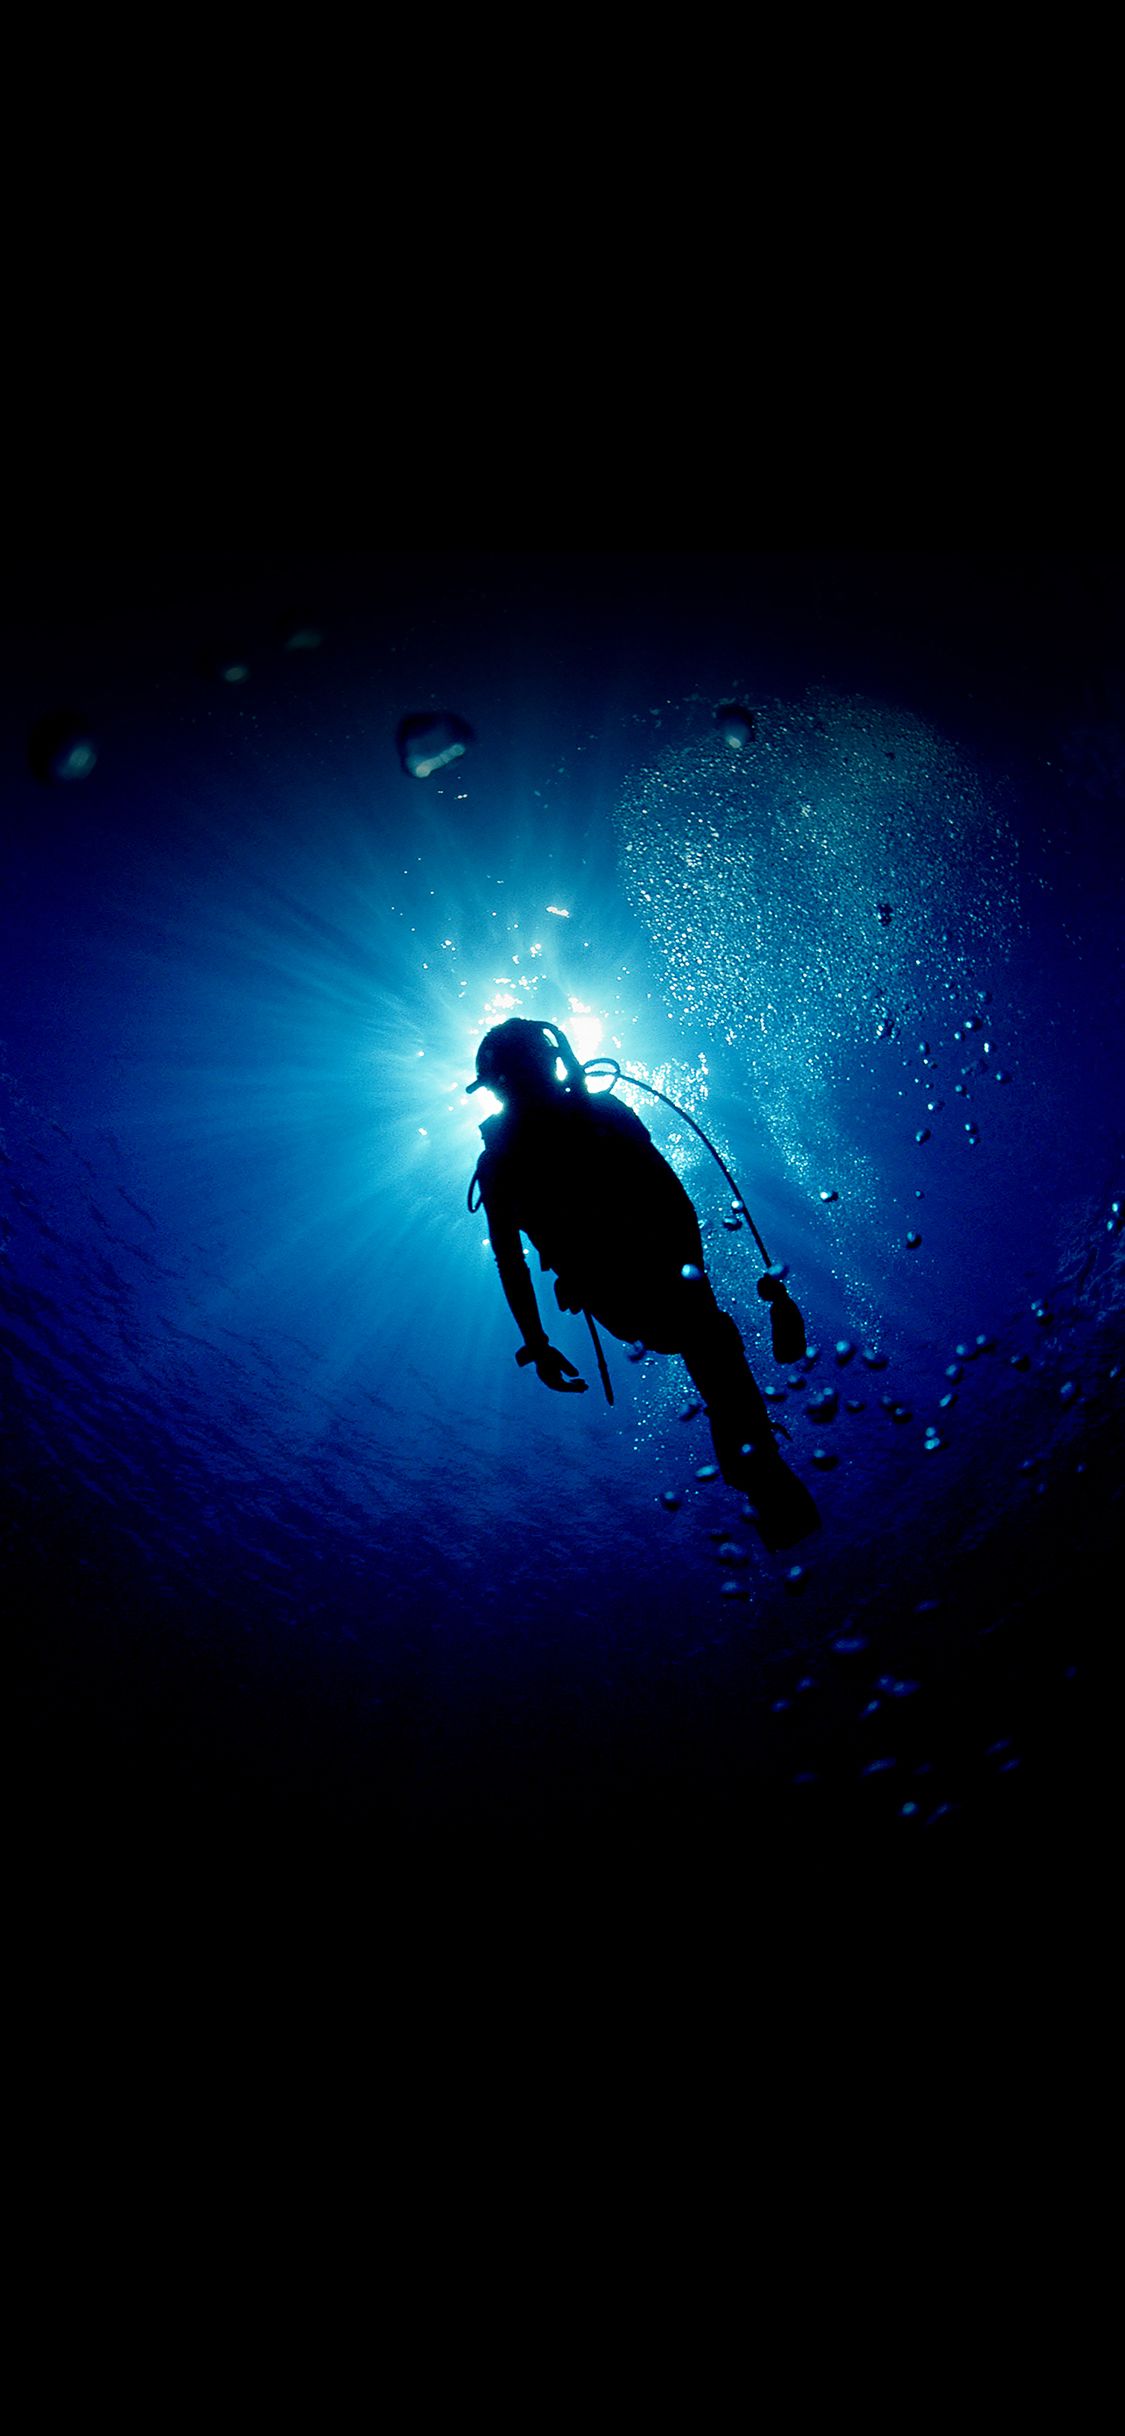 iPhone wallpaper. deep blue ocean dive